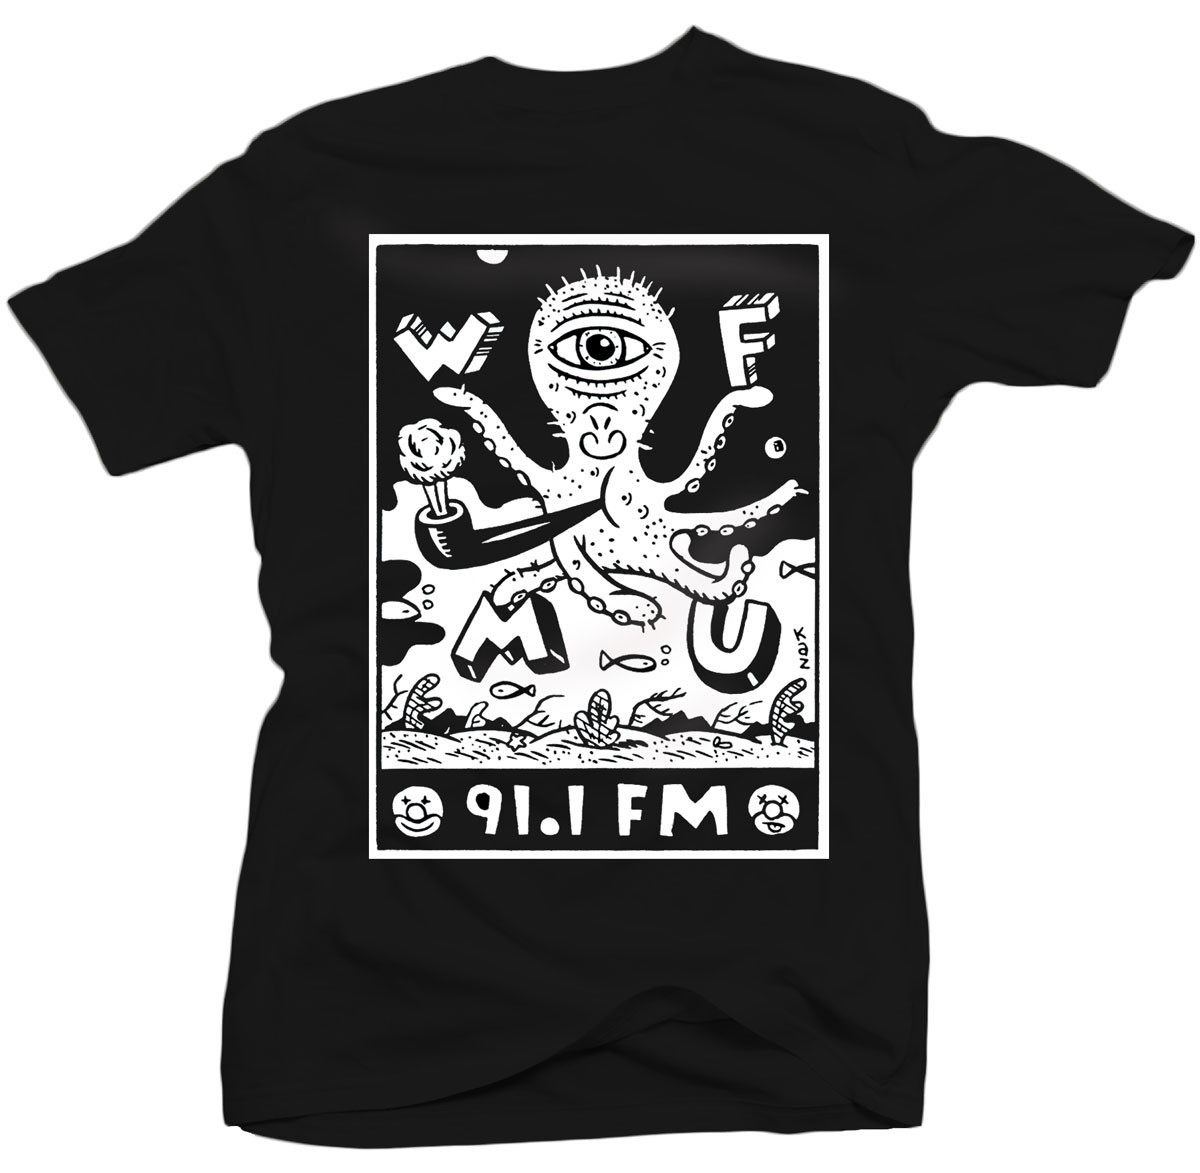 WFMU 91.1 FM Listen Live - East Orange, United States